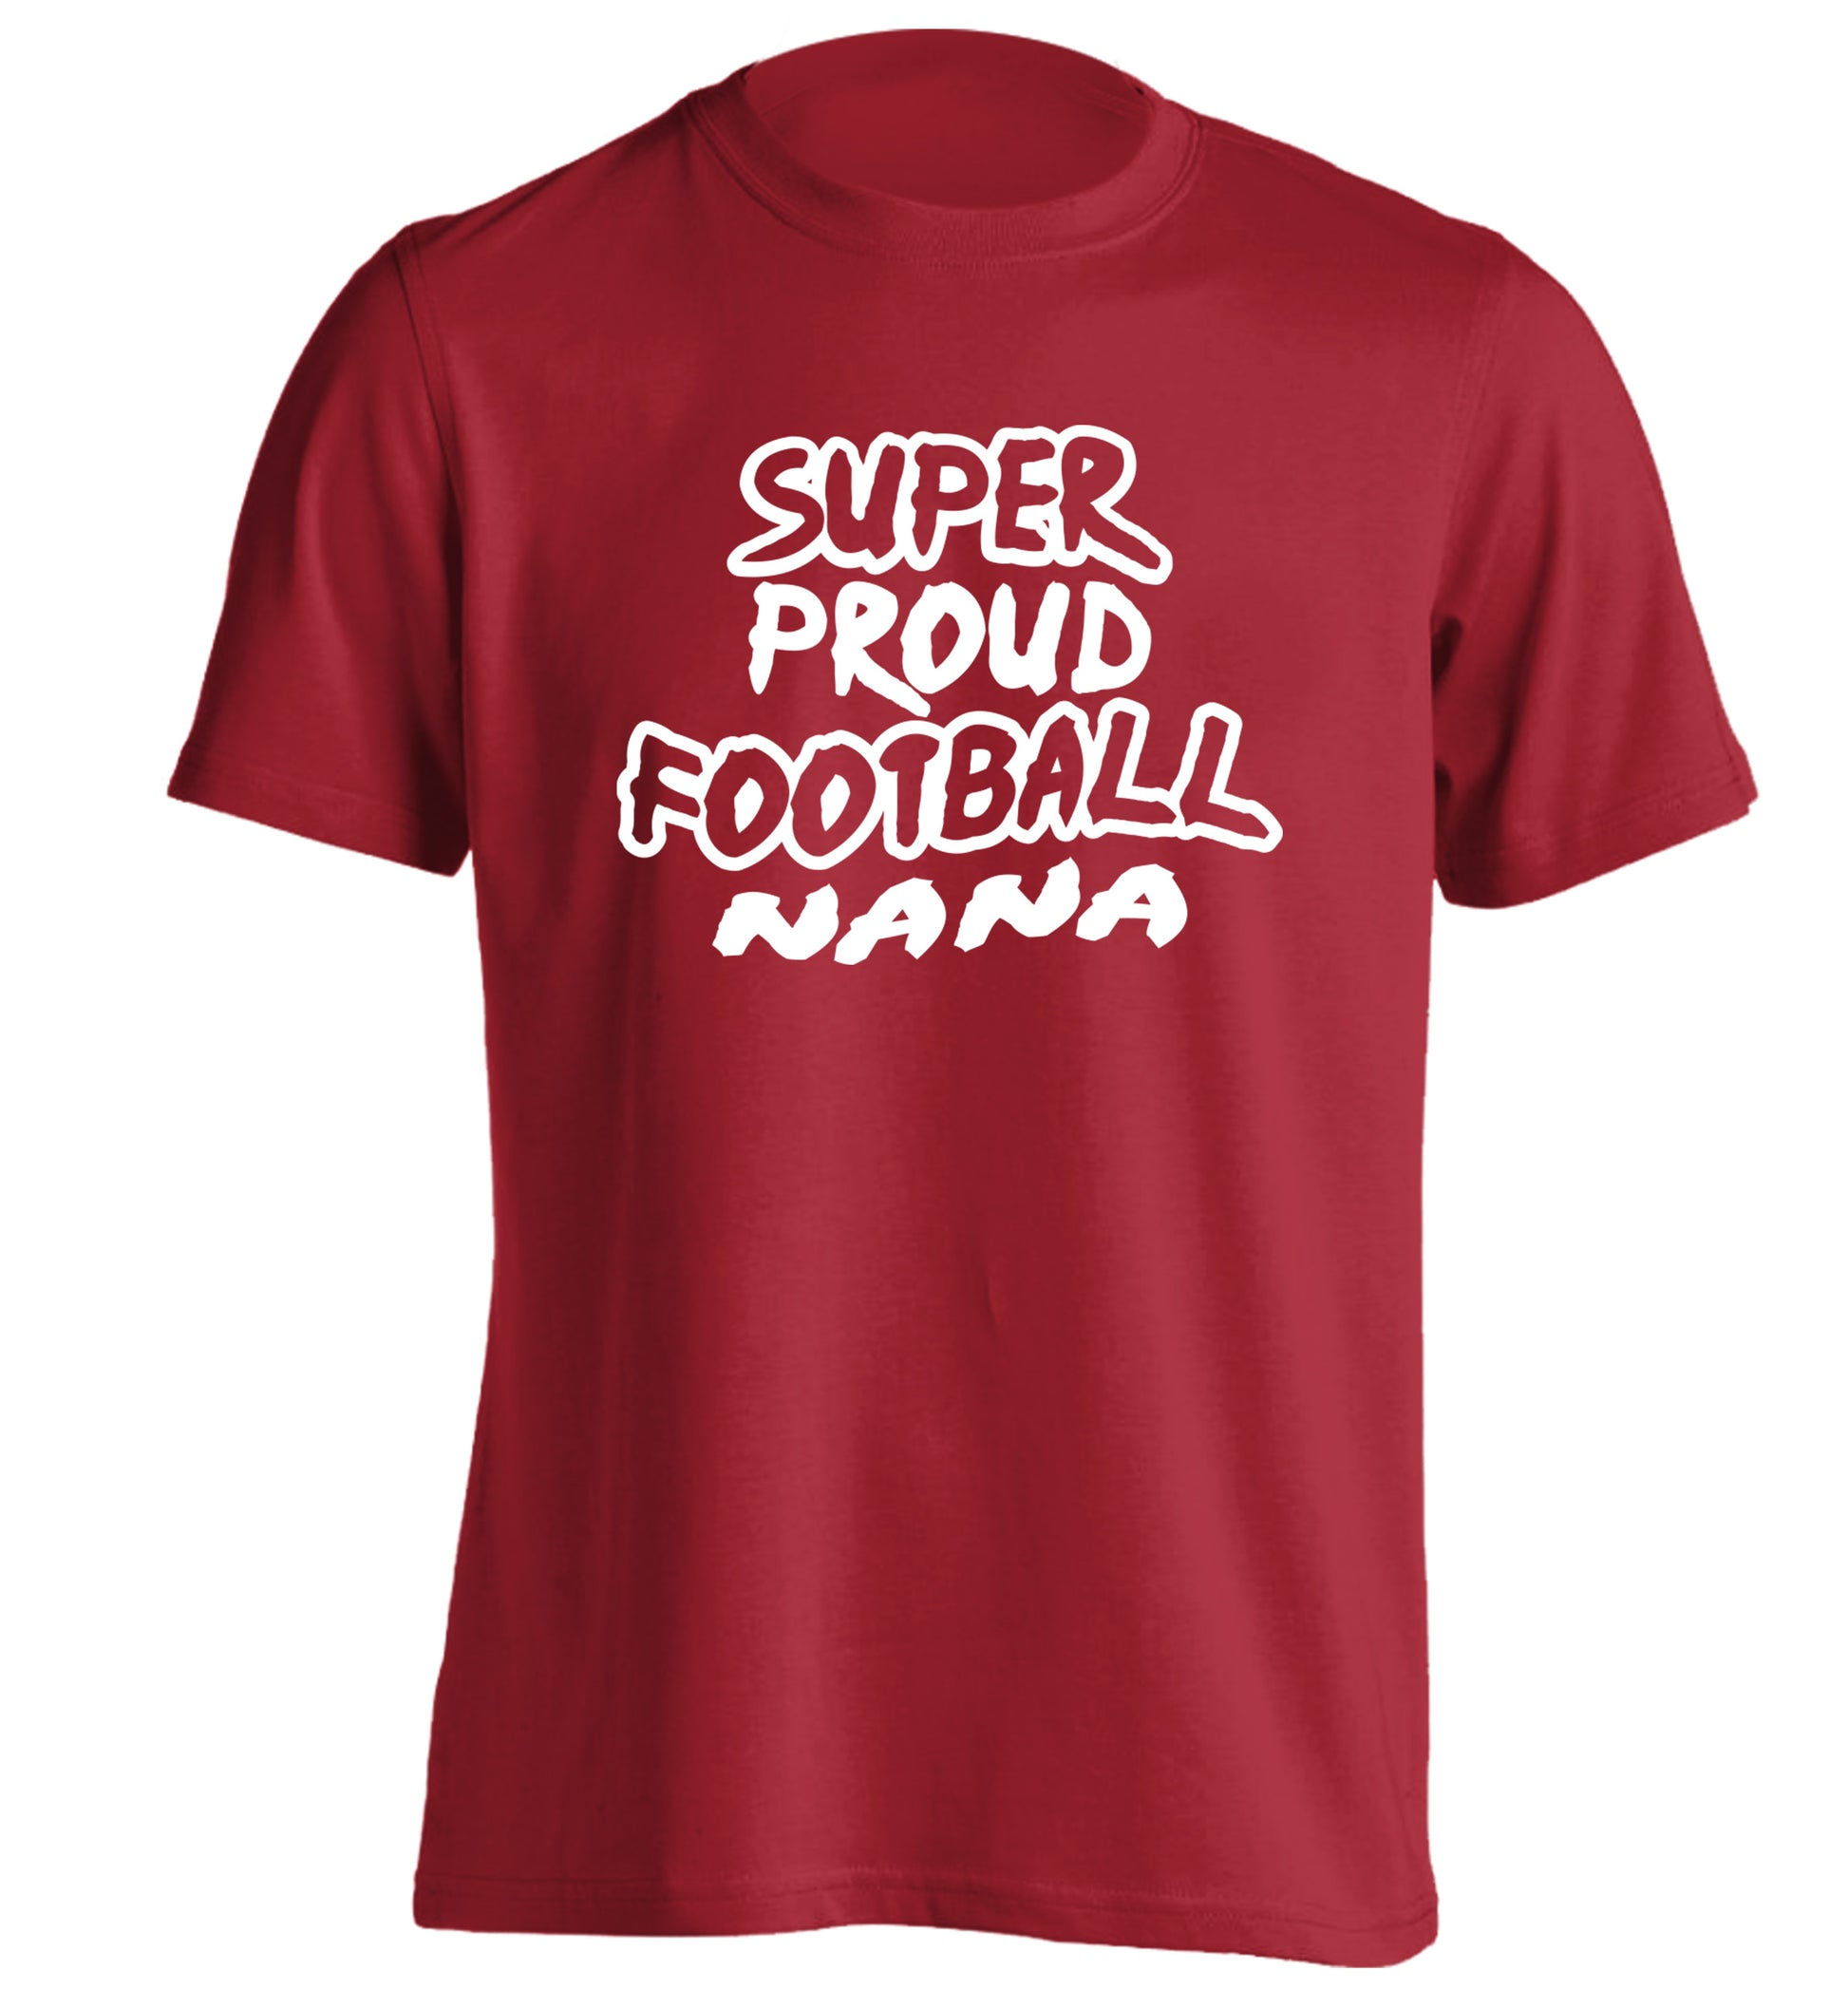 Super proud football nana adults unisexred Tshirt 2XL